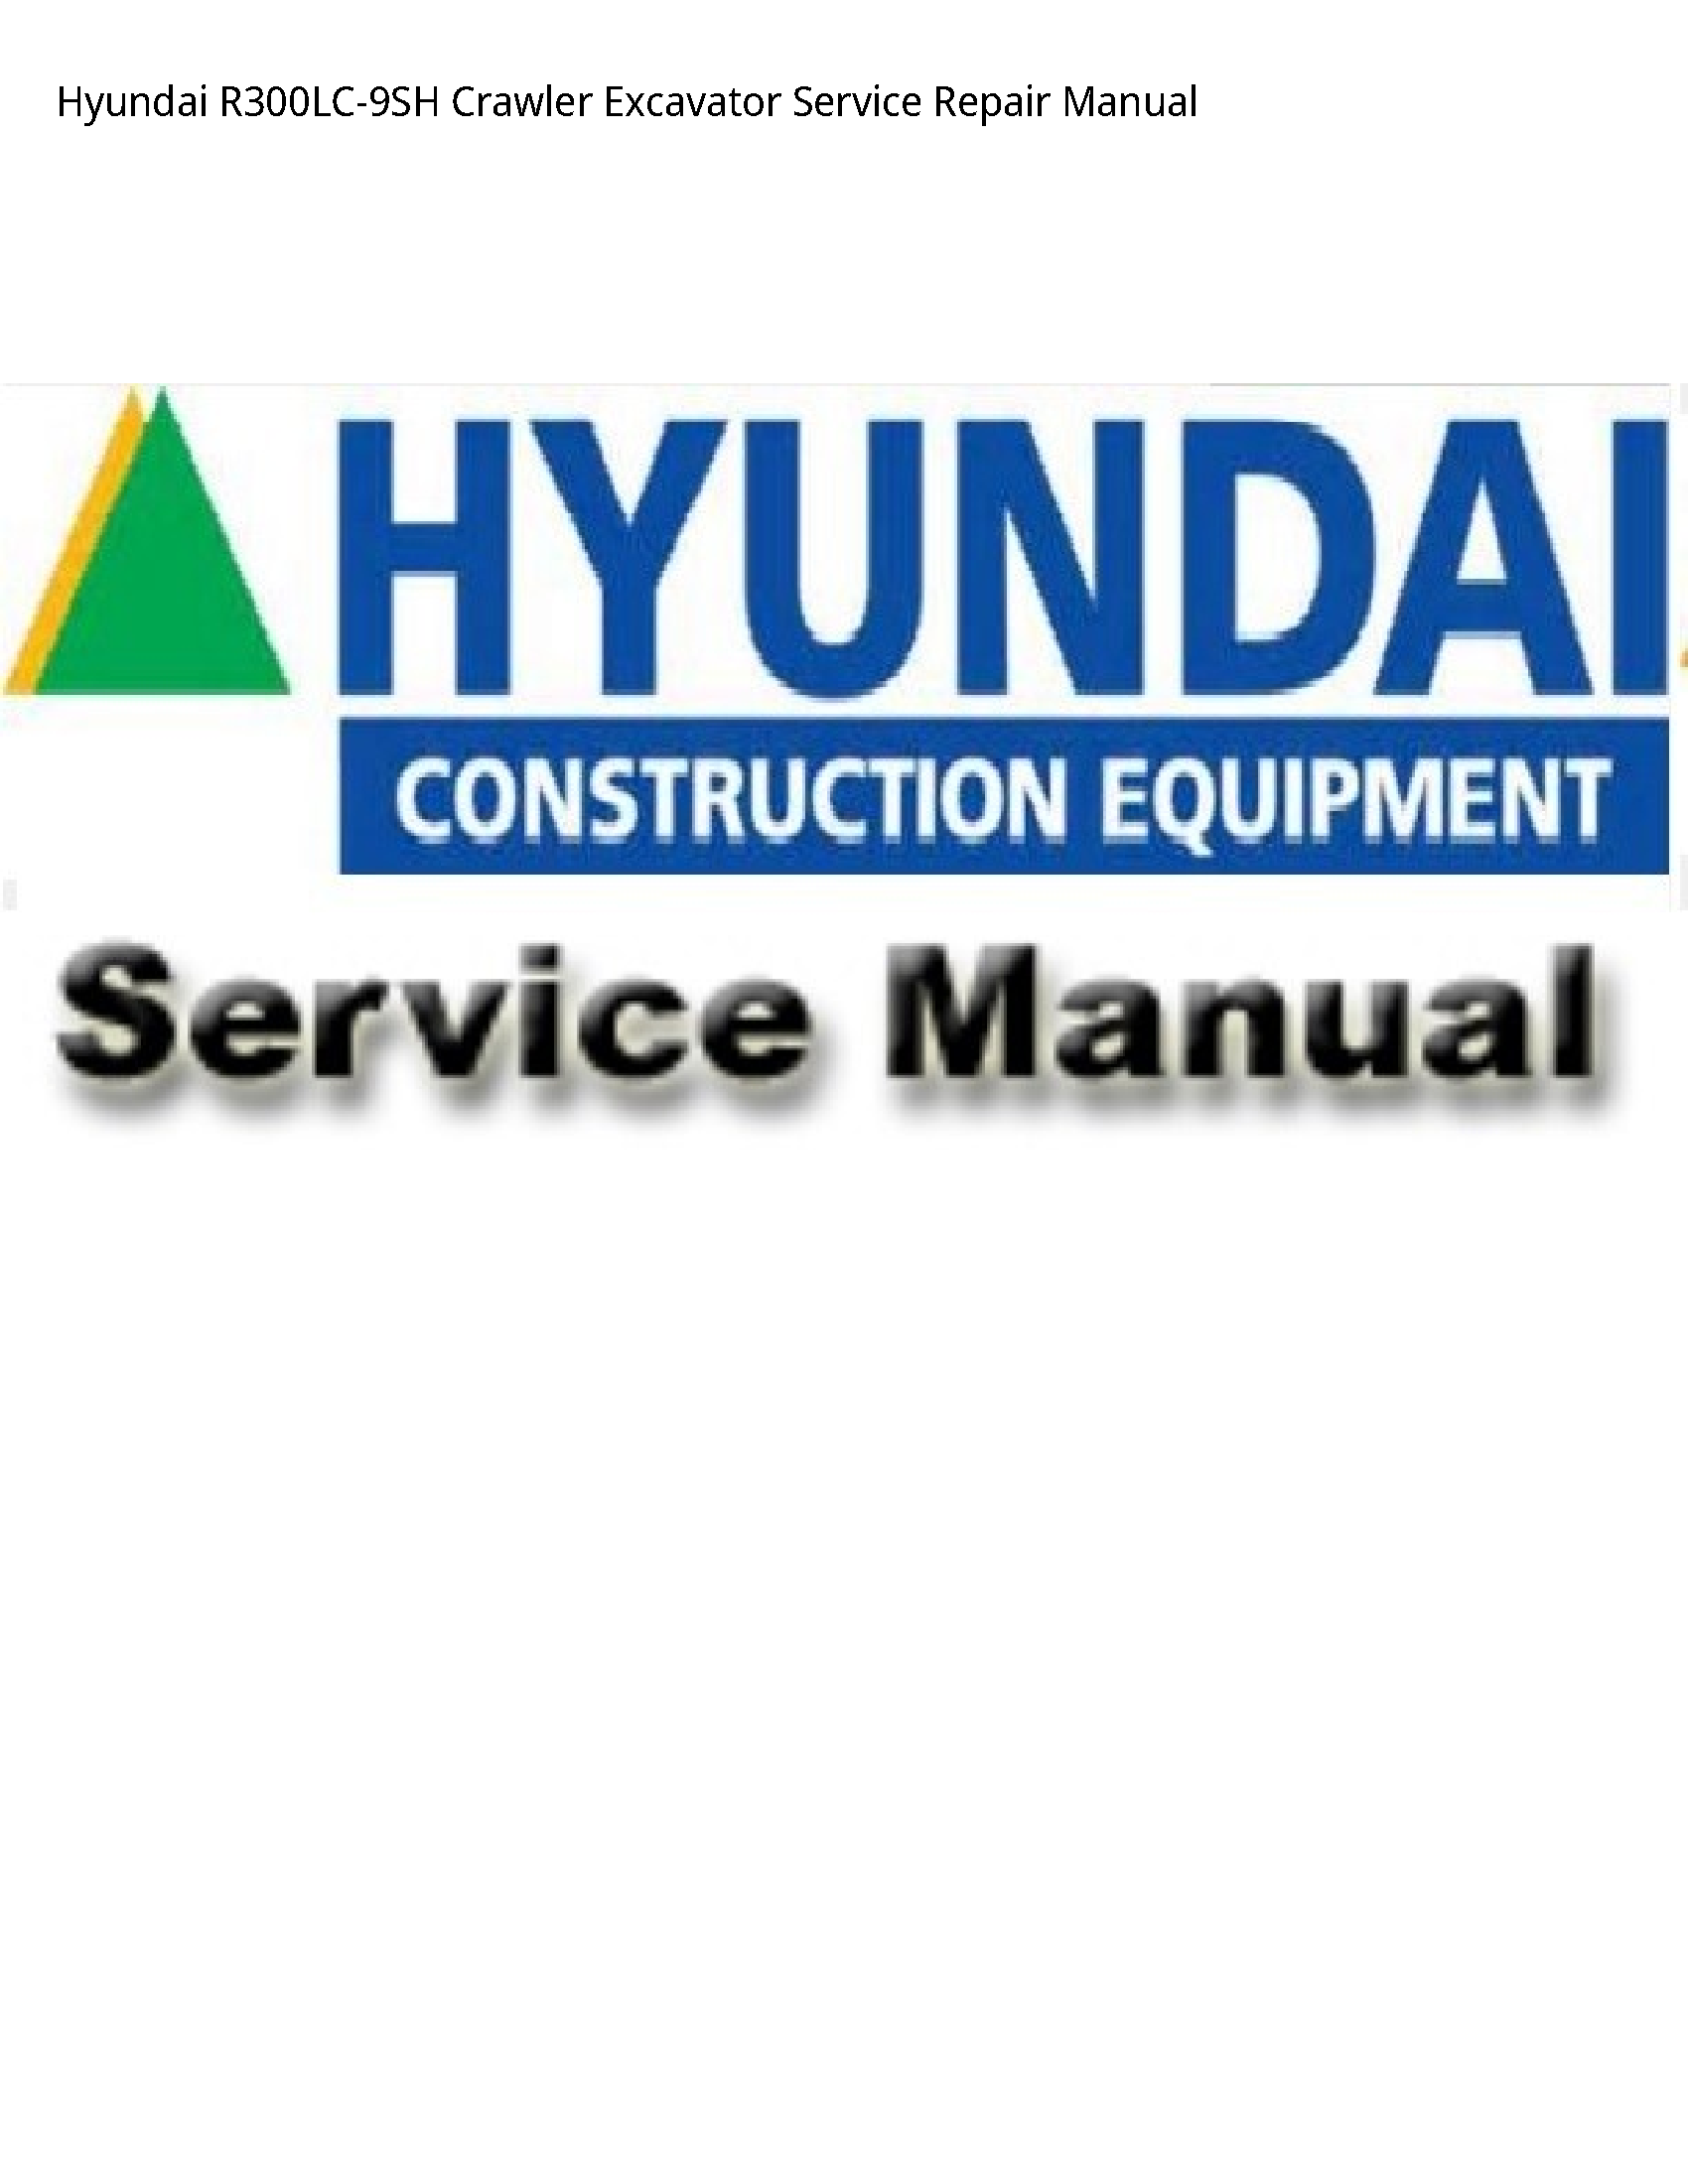 Hyundai R300LC-9SH Crawler Excavator manual